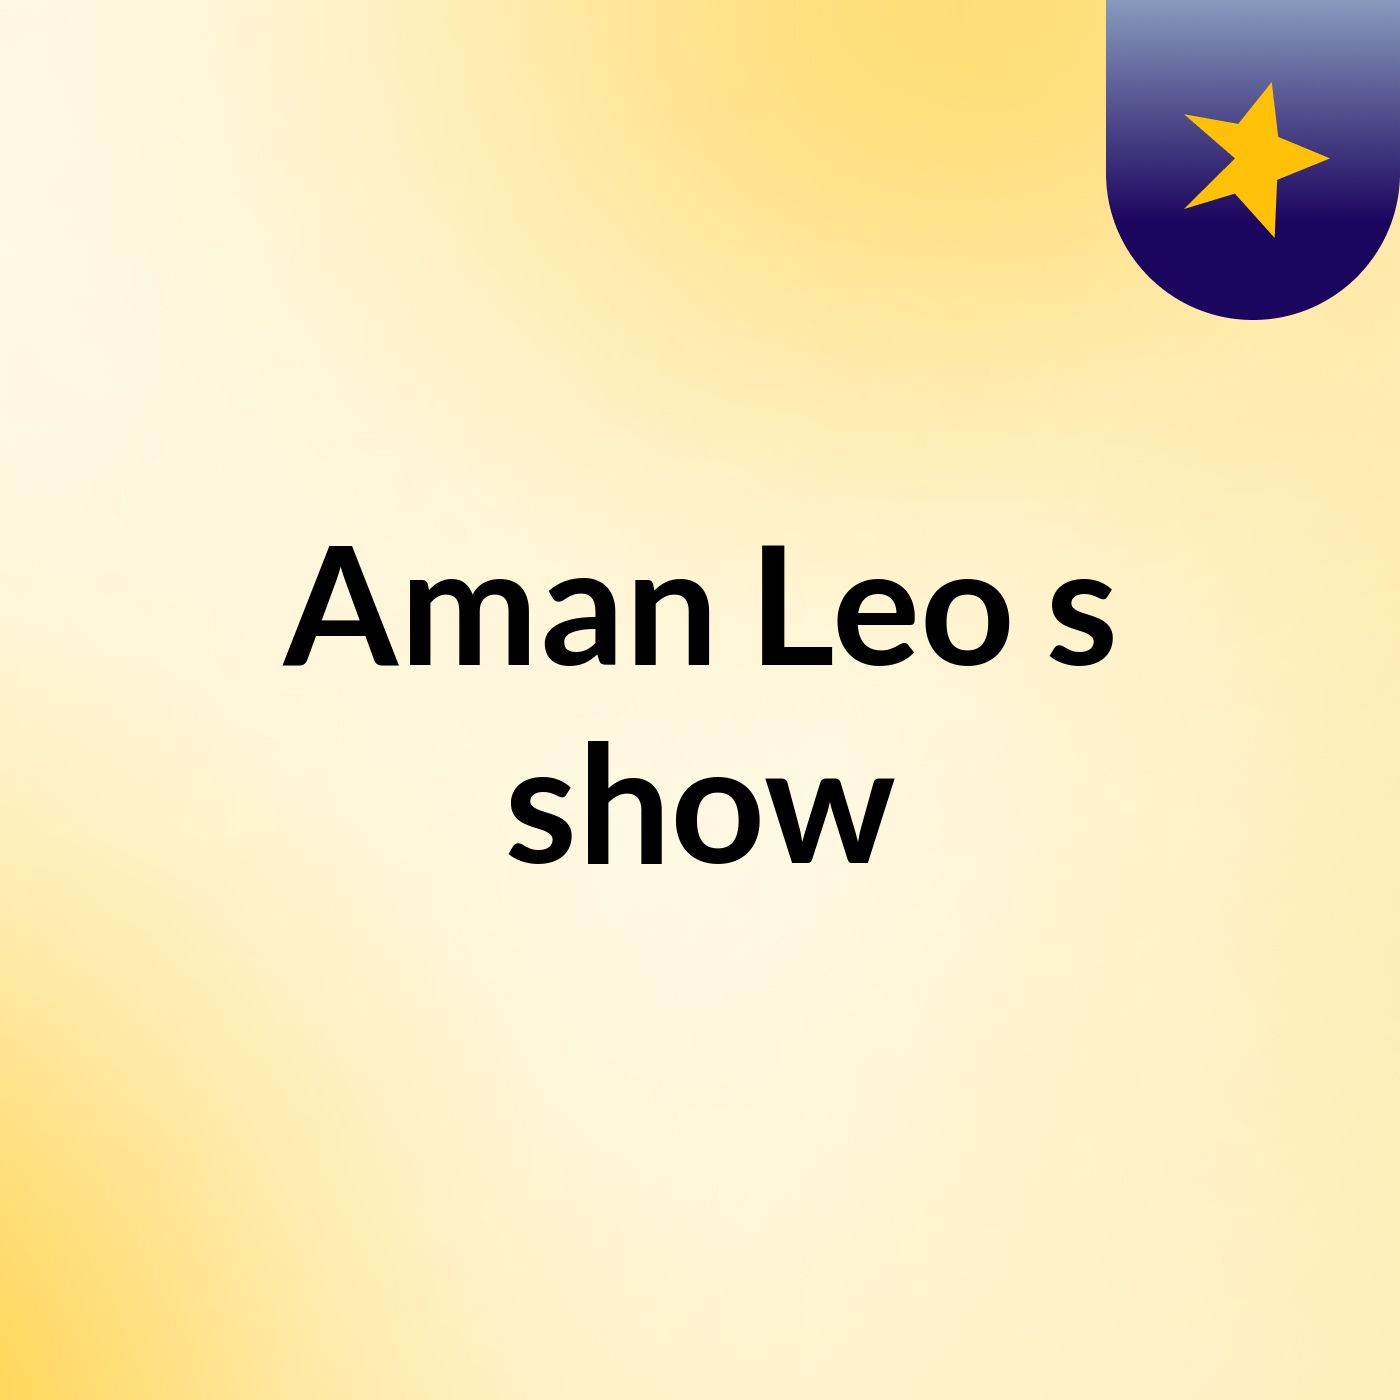 Aman Leo's show